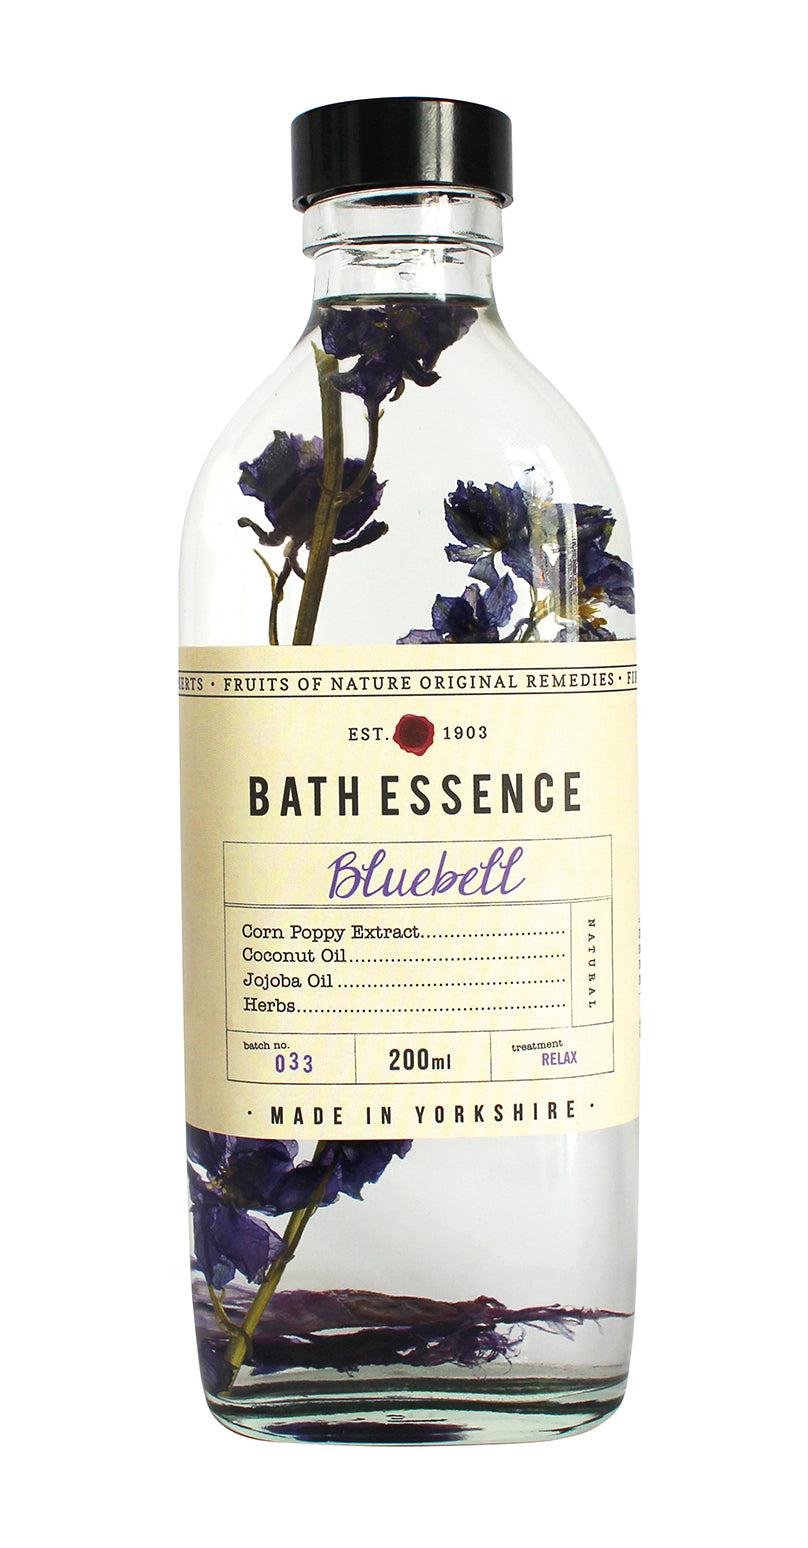 Bluebell bath essence